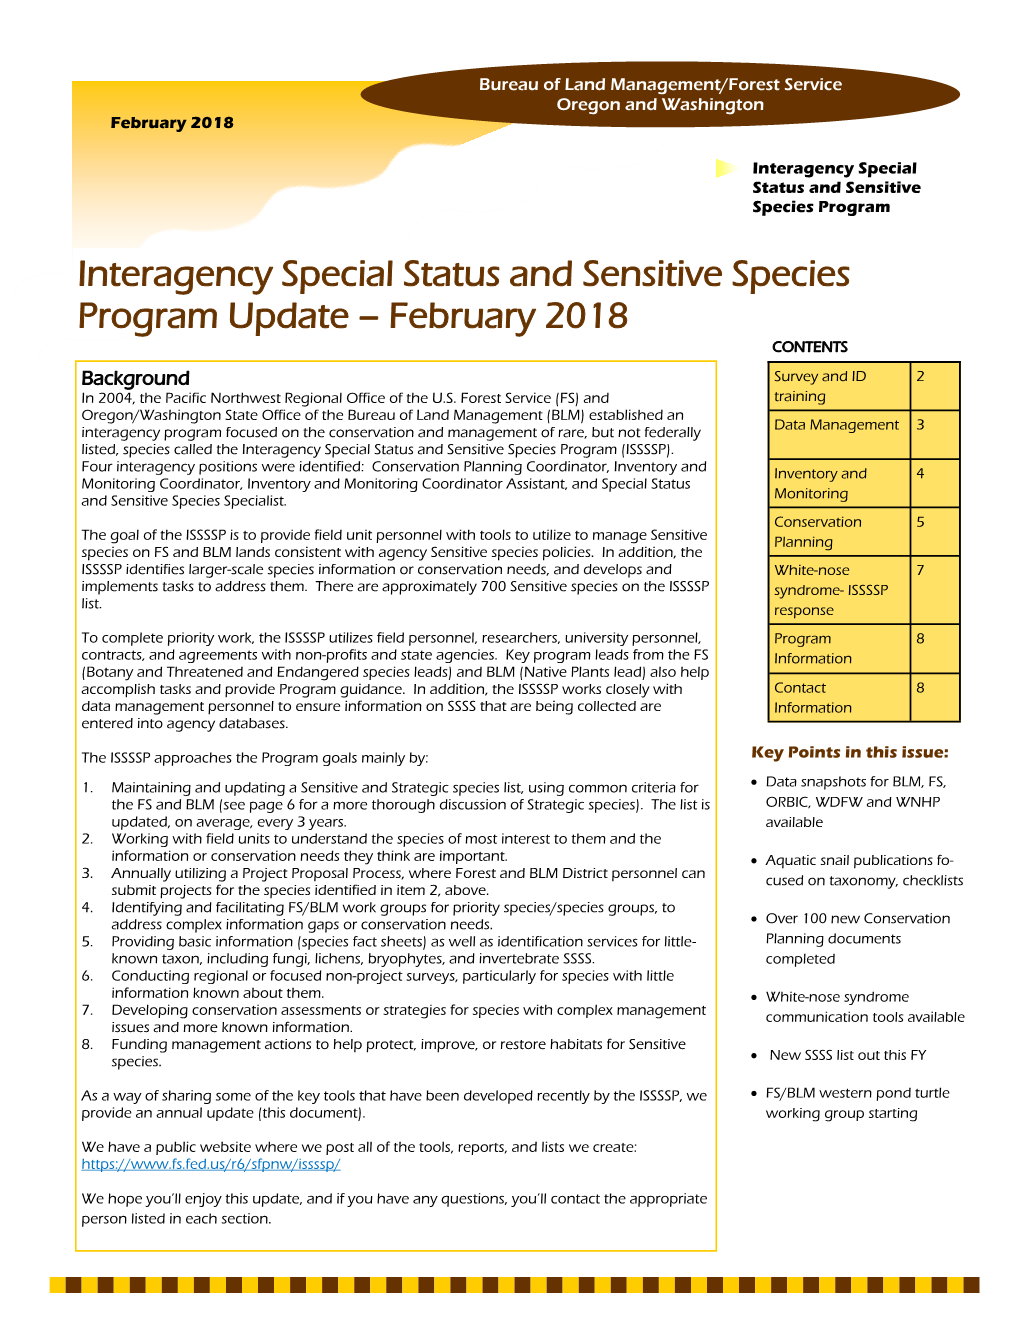 Interagency Special Status and Sensitive Species Program Update